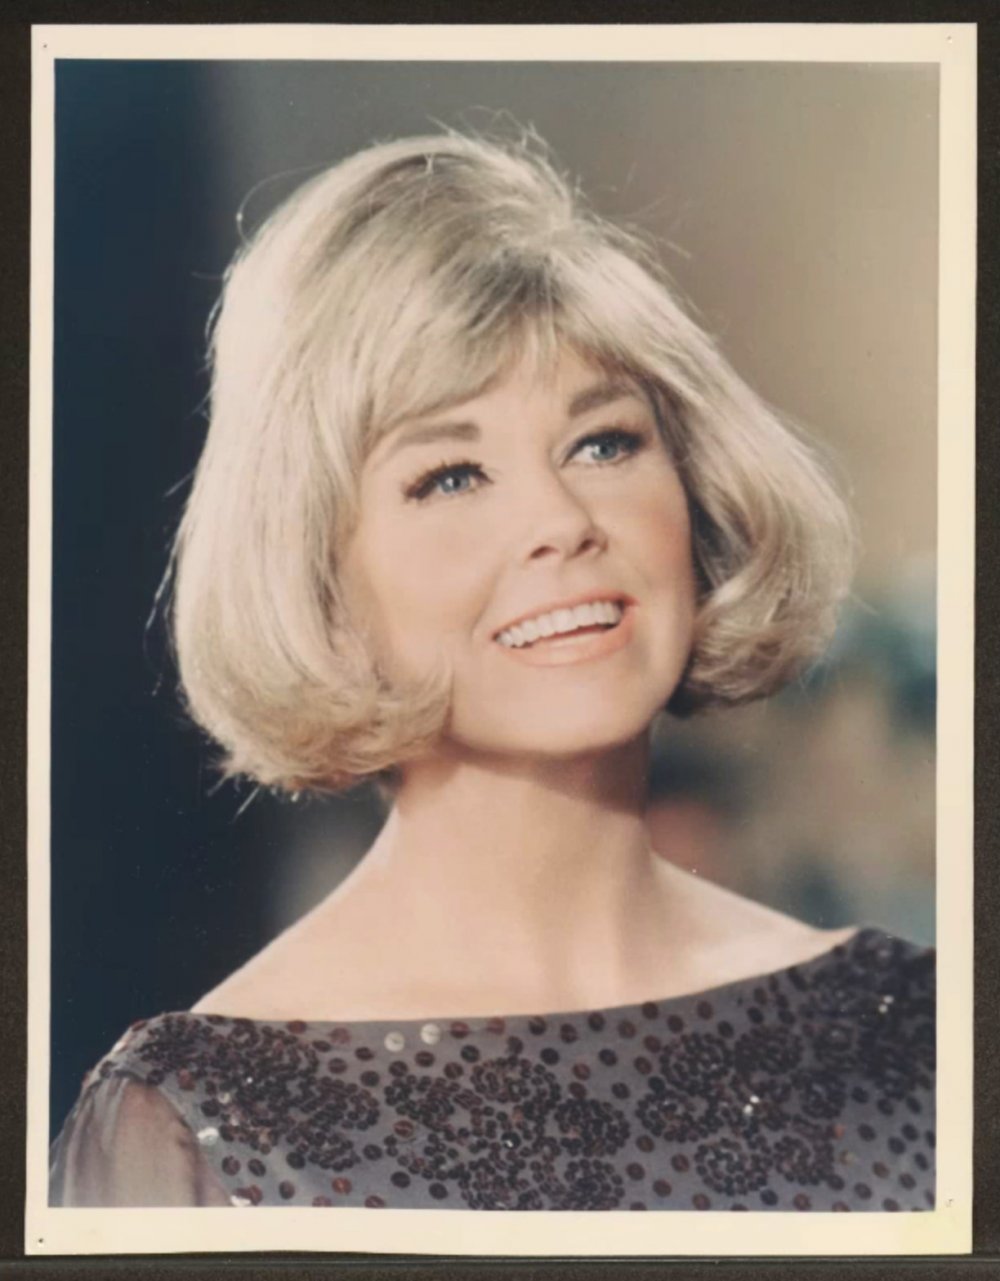 Doris Day in The Doris Day Show (1968-73)